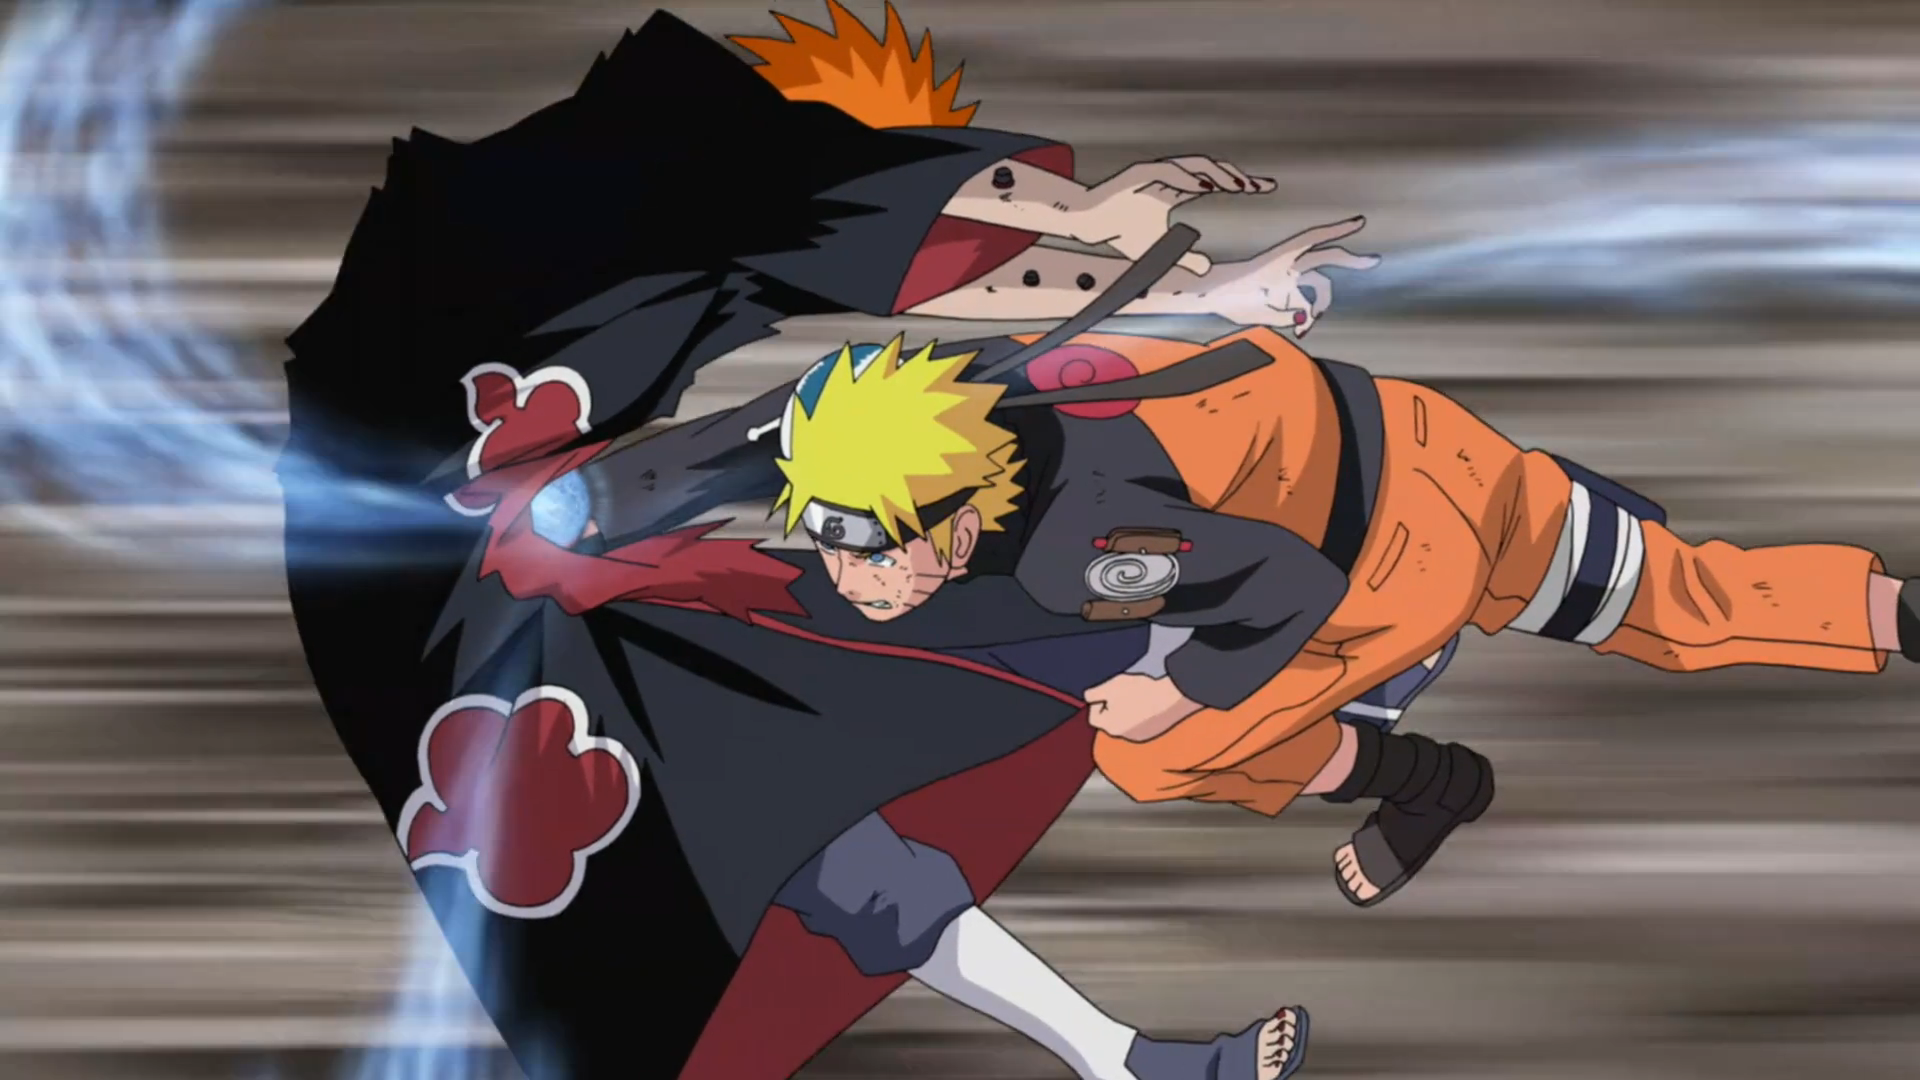 Pain's Assault (Arc), Narutopedia